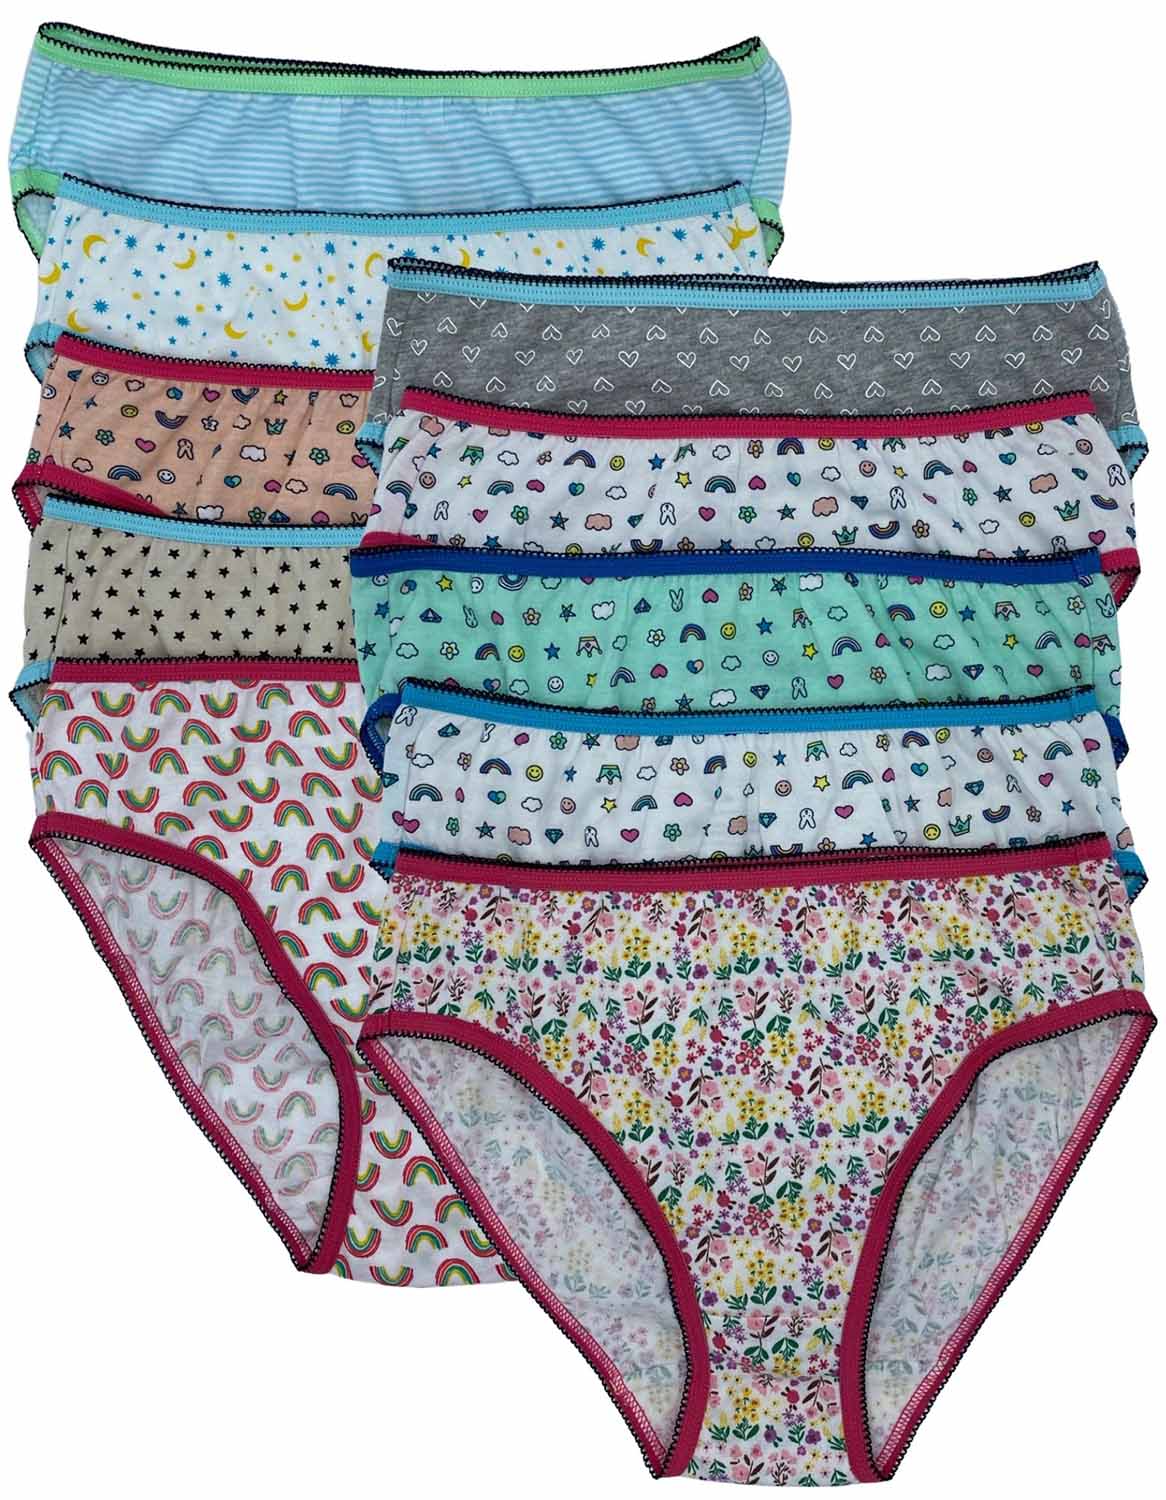 Girls 100% Cotton Assorted Printed Underwear Size 6 - at -   